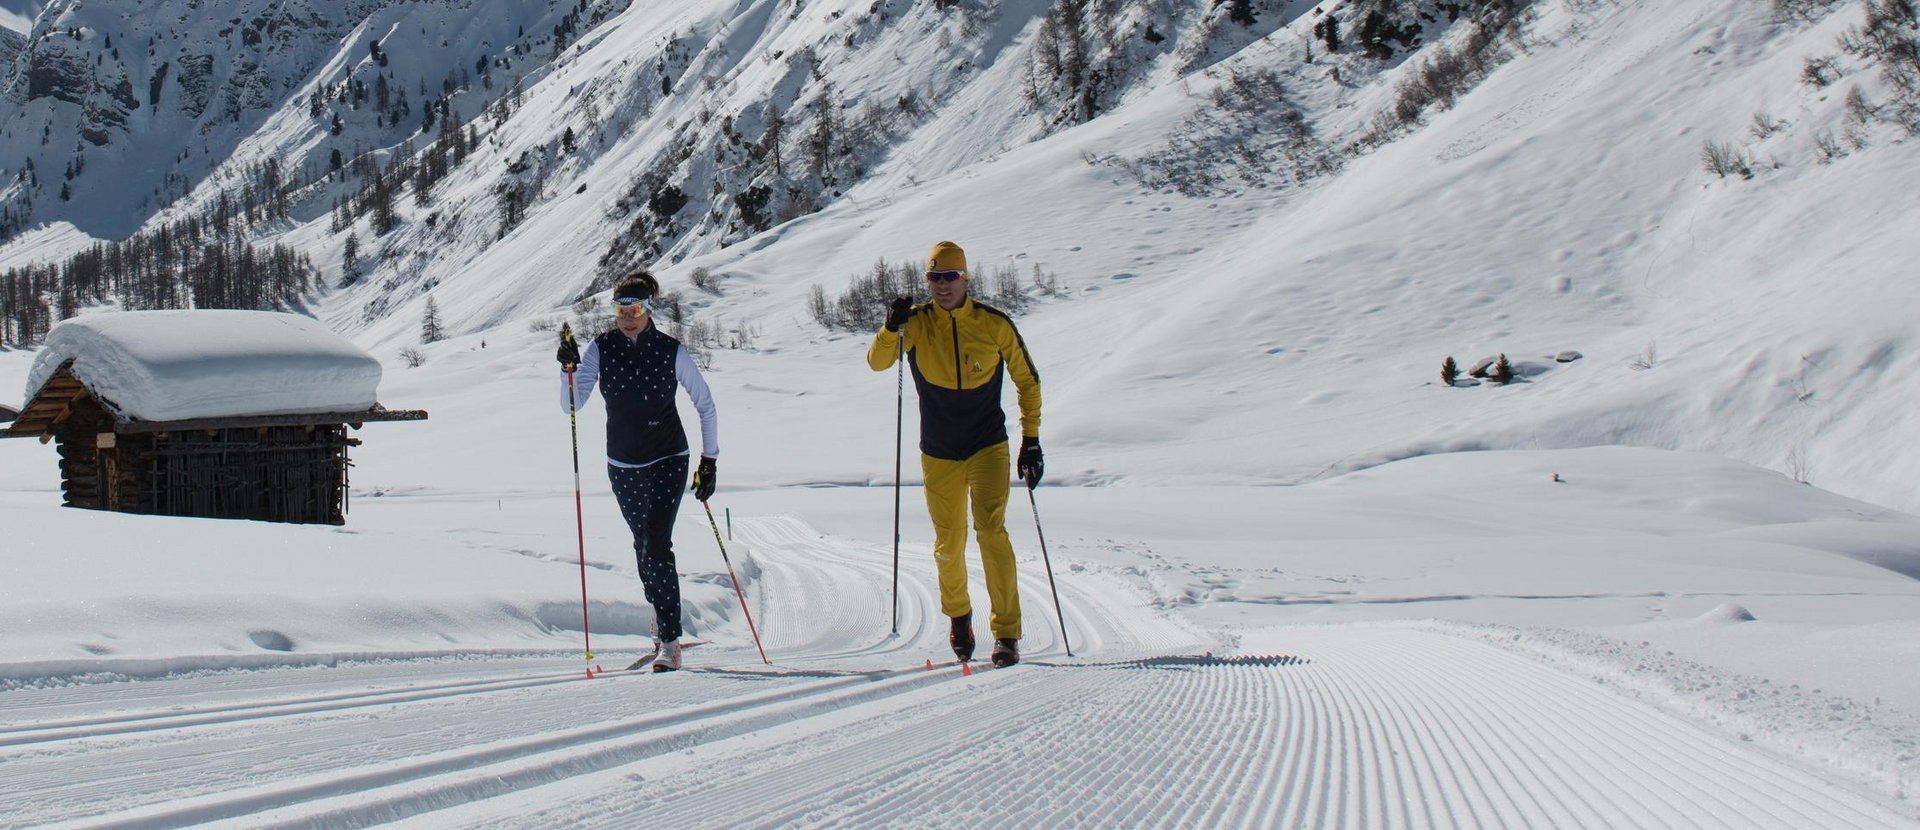 Langlaufen in Davos Klosters